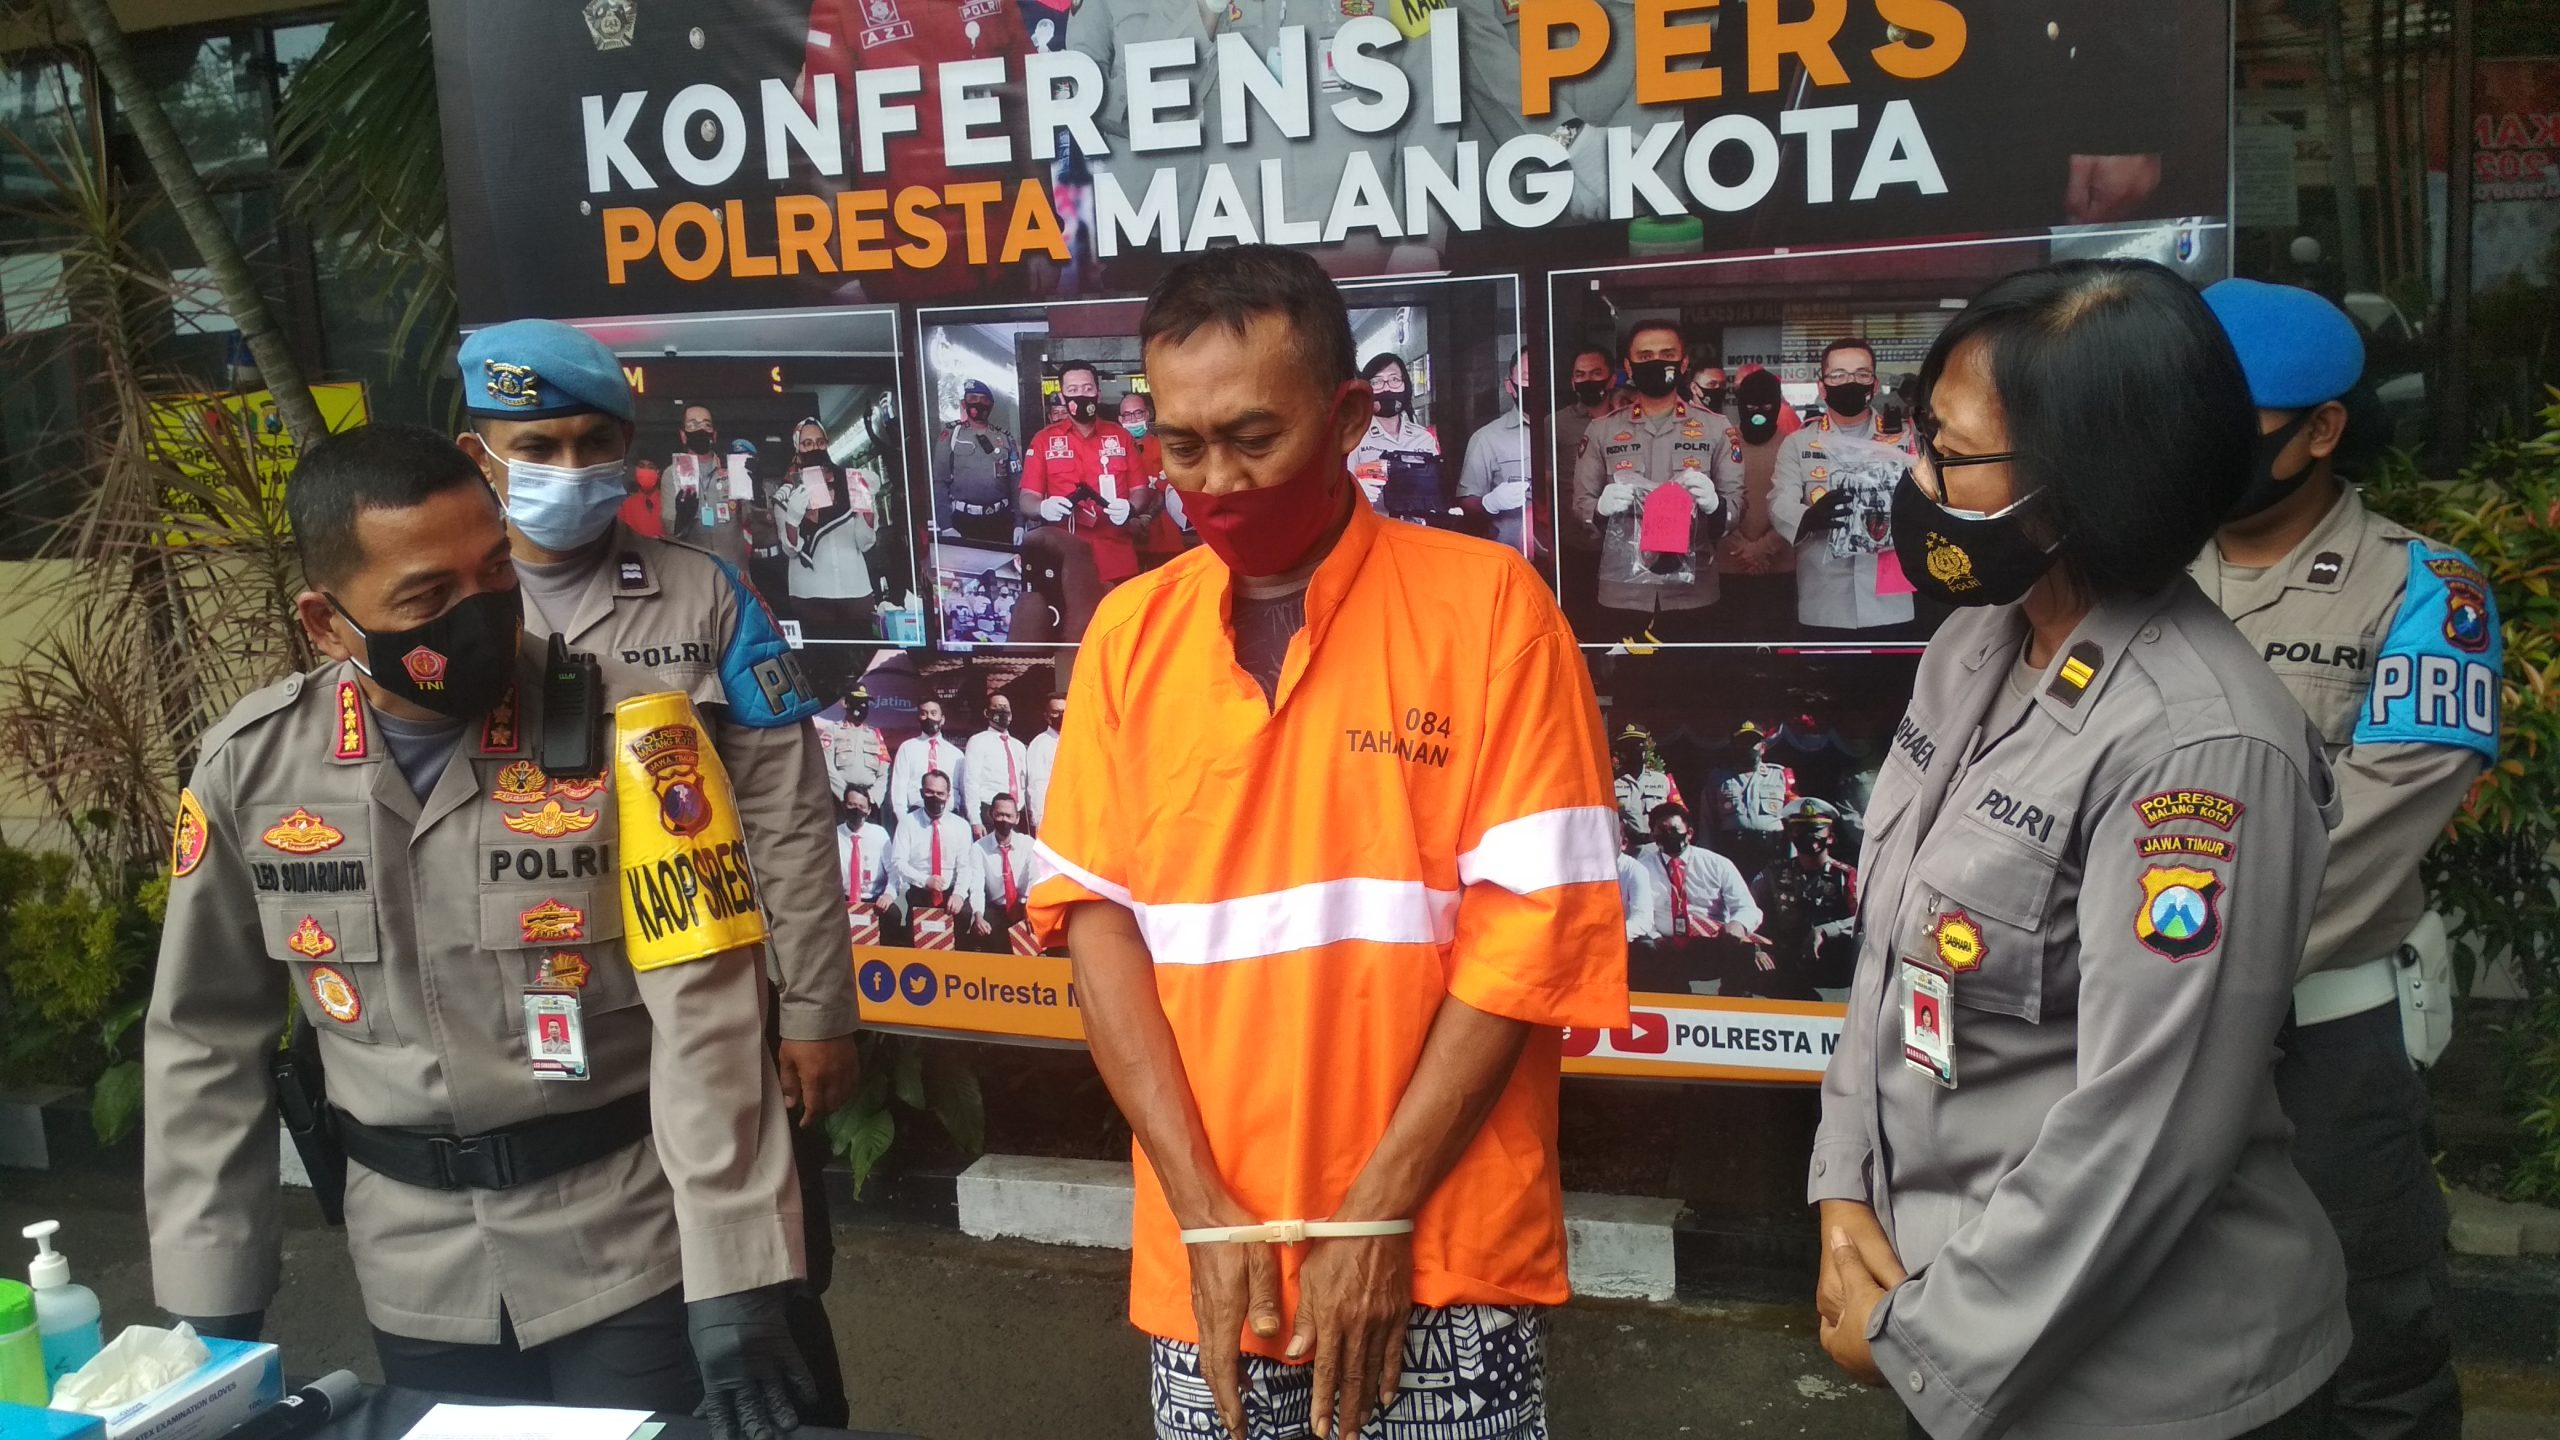 Penyebar Hoax Zona Hitam Membawa Nama Kapolresta Malang Kota Ditangkap